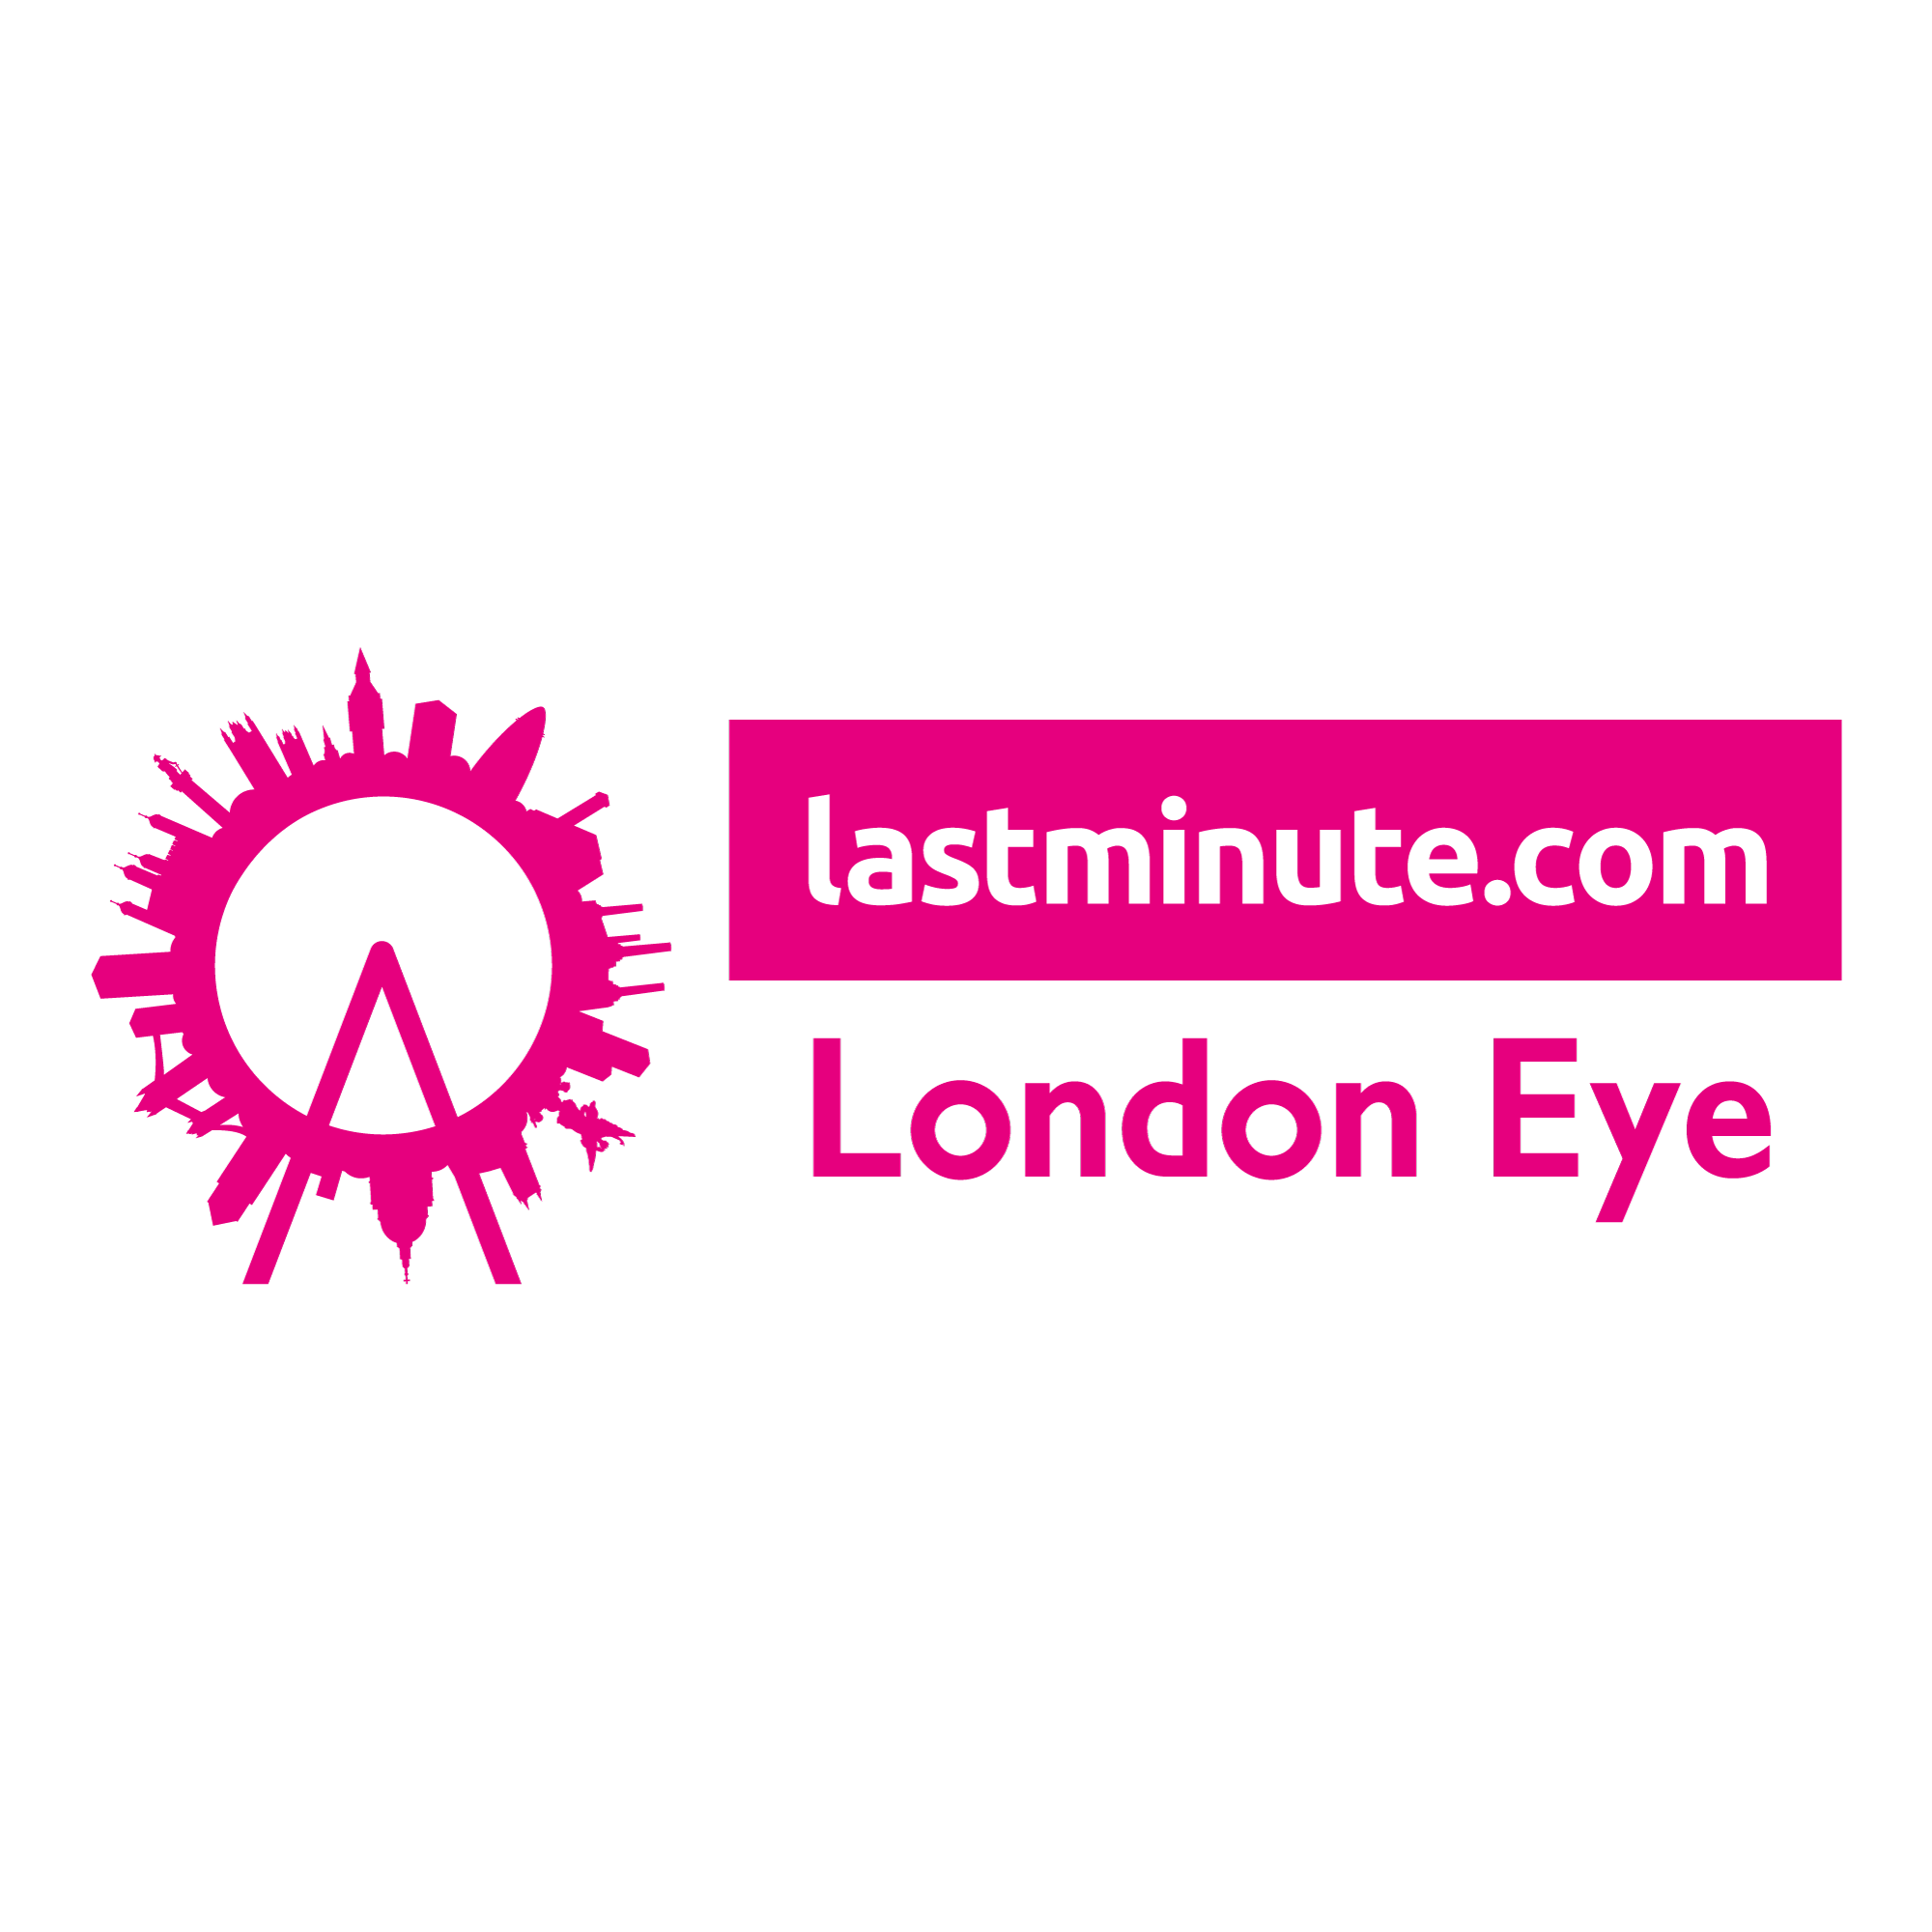 lastminute.com London Eye Logo